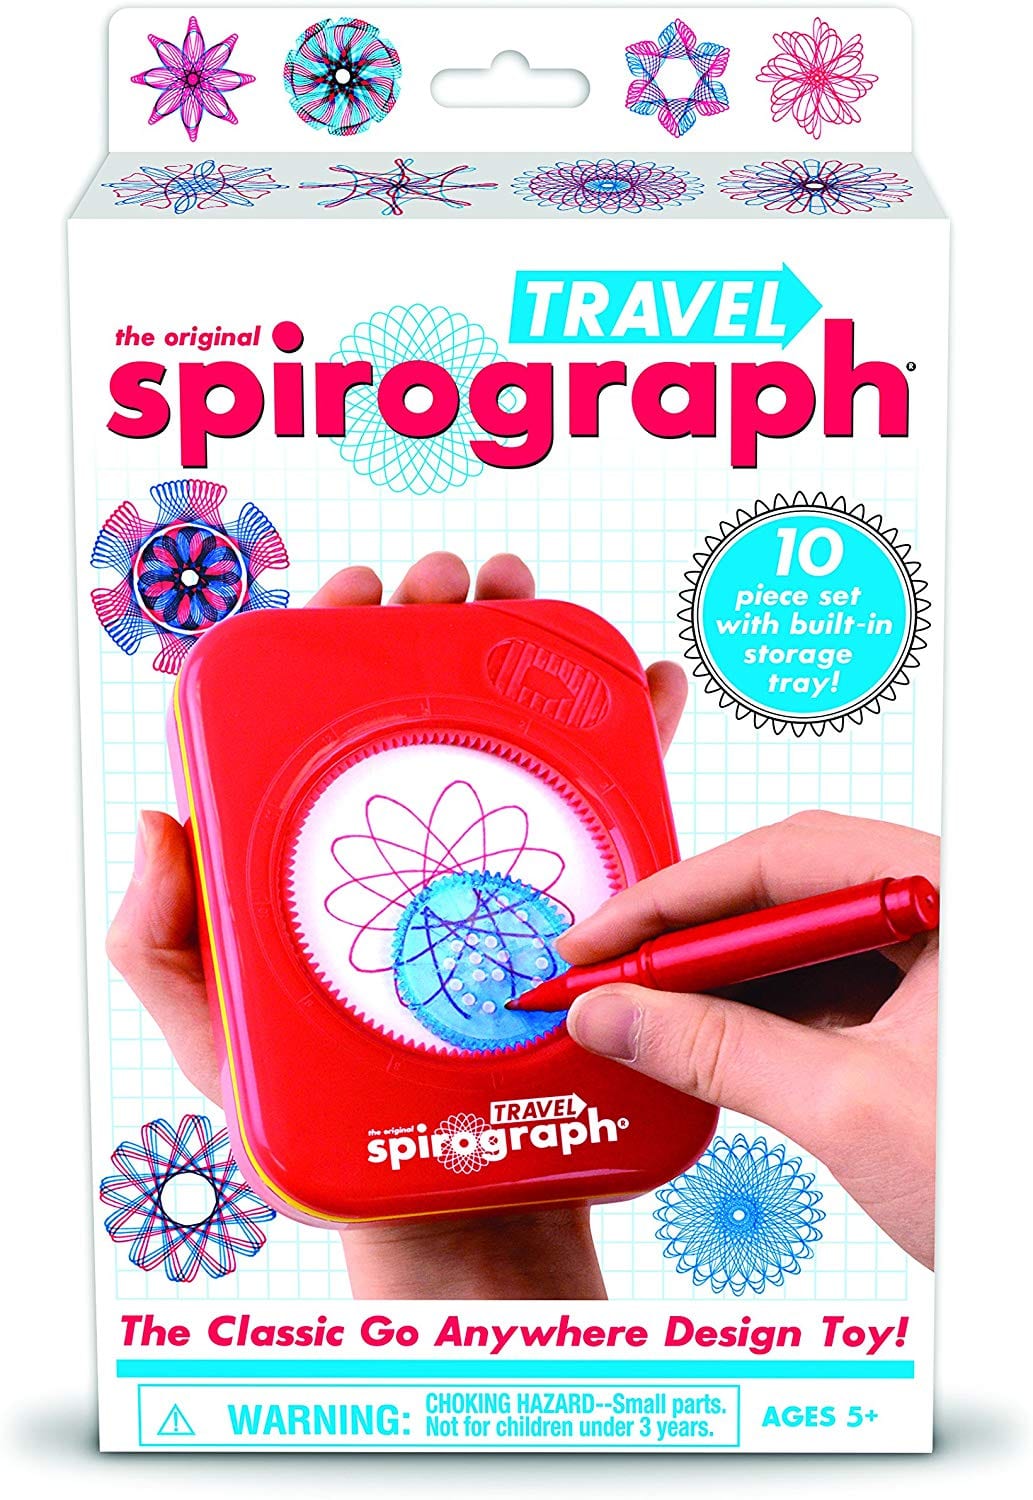 Travel Spirograph